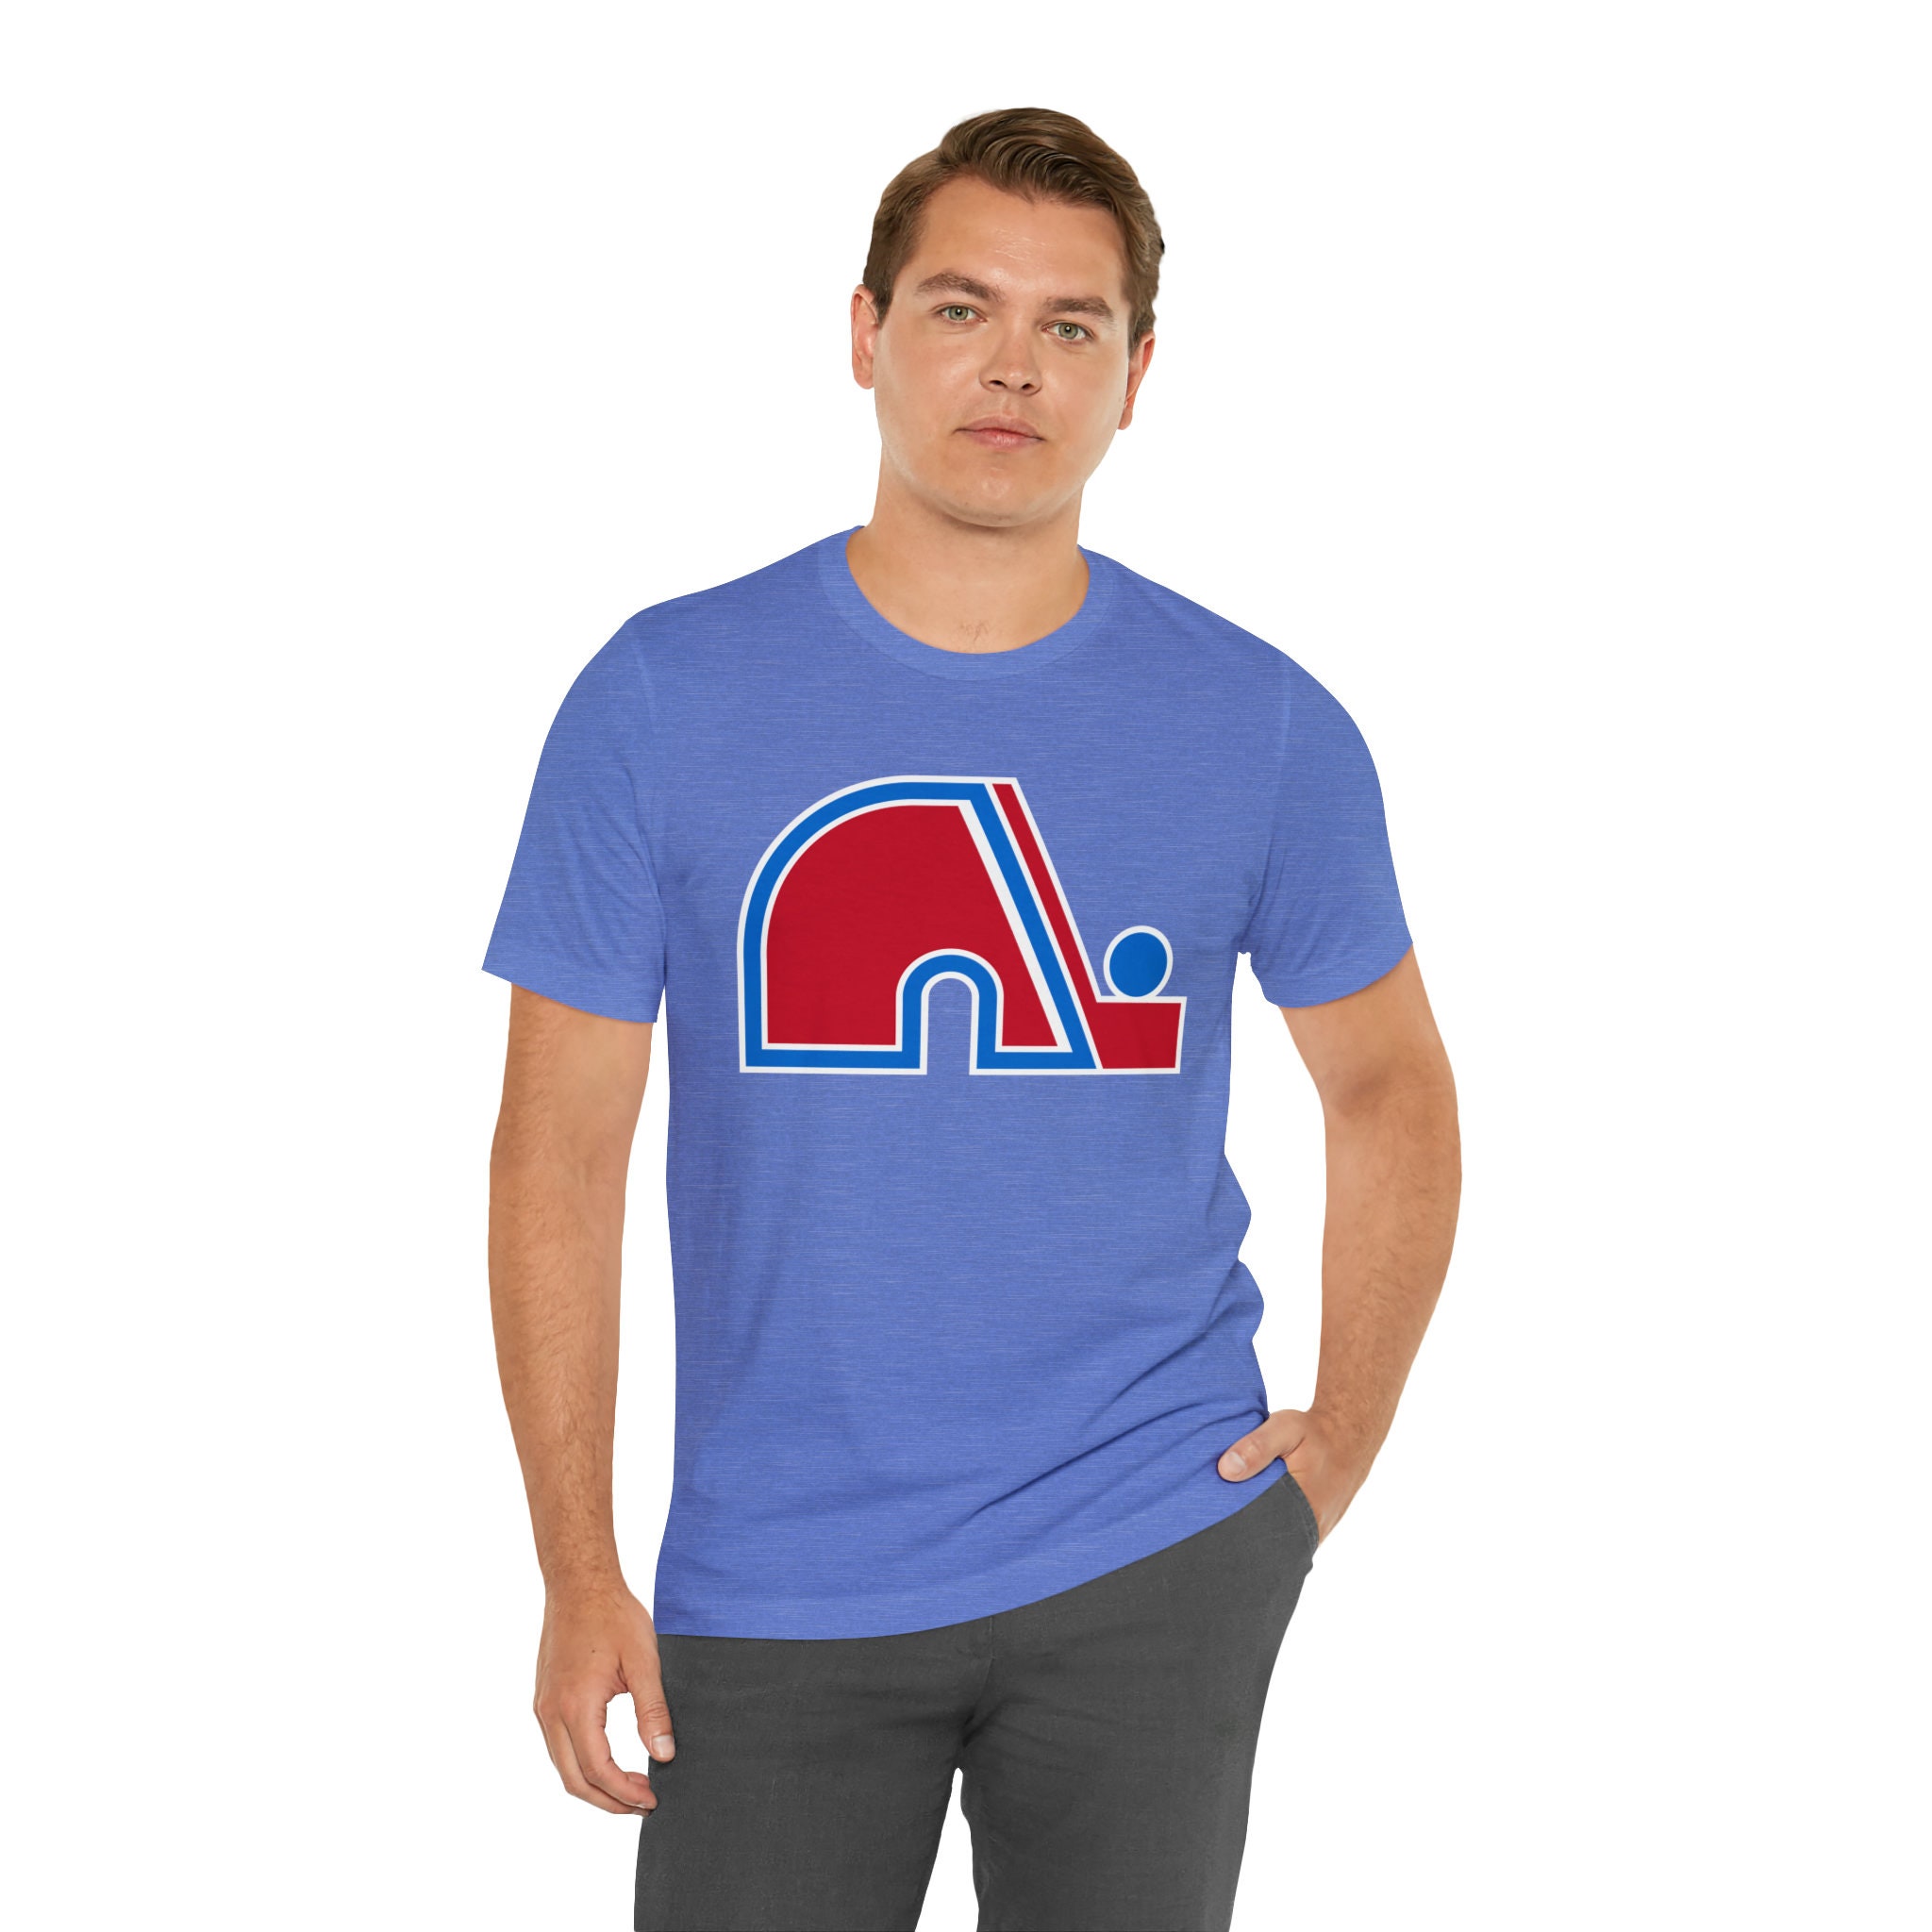 Quebec Nordiques logo Team Shirt jersey shirt